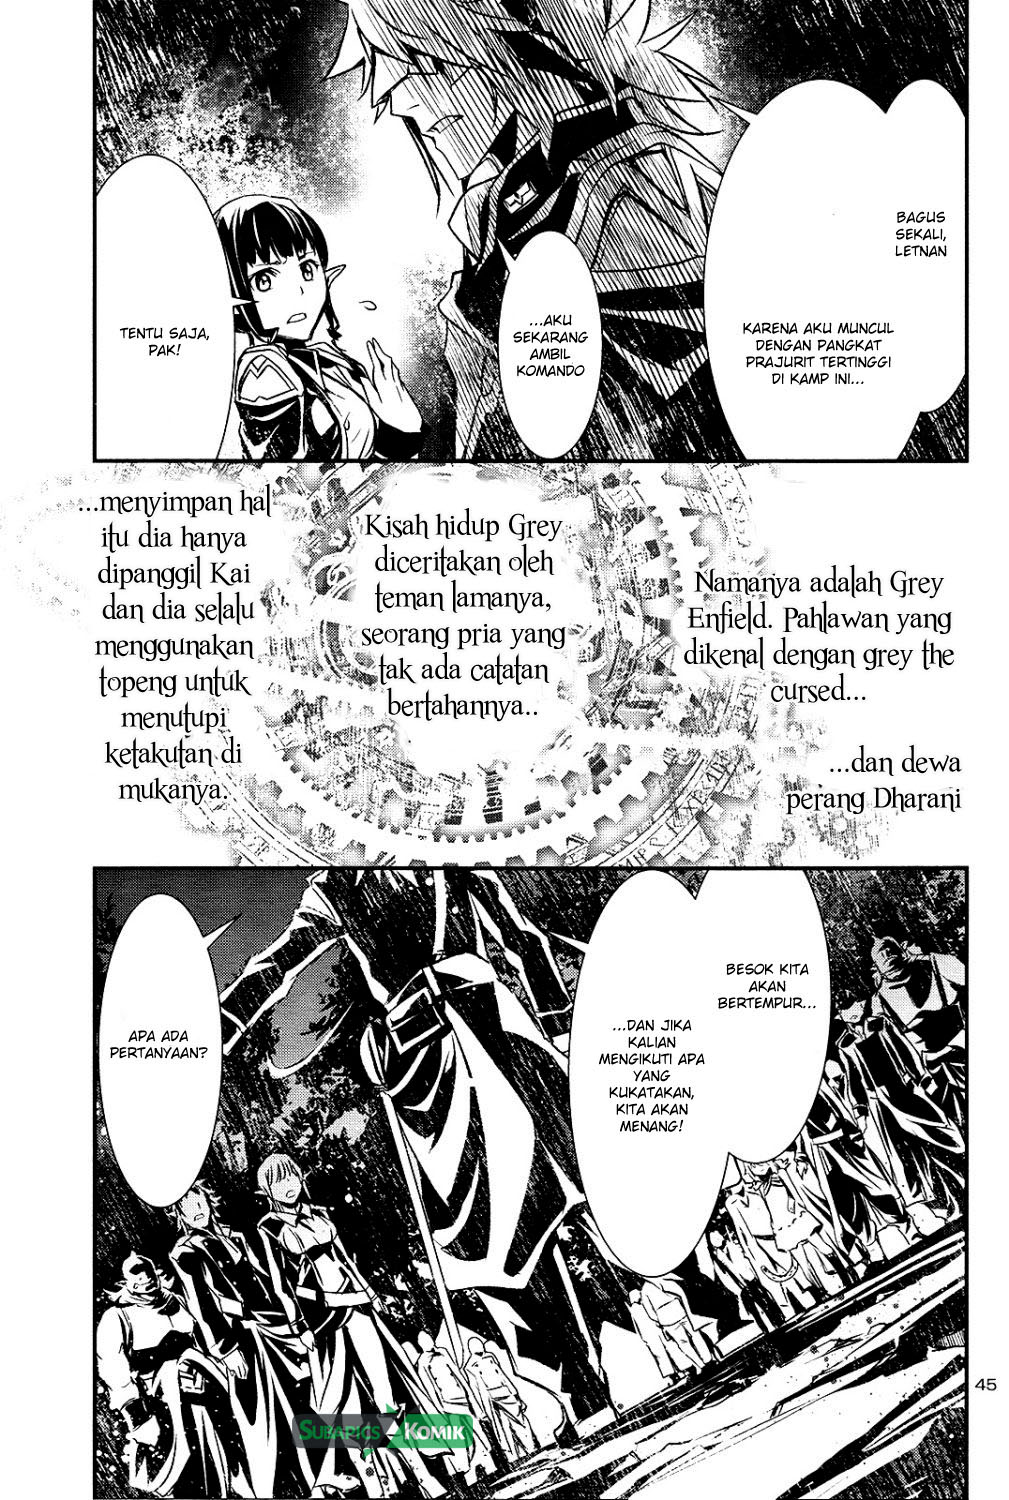 Shinju no Nectar Chapter 4